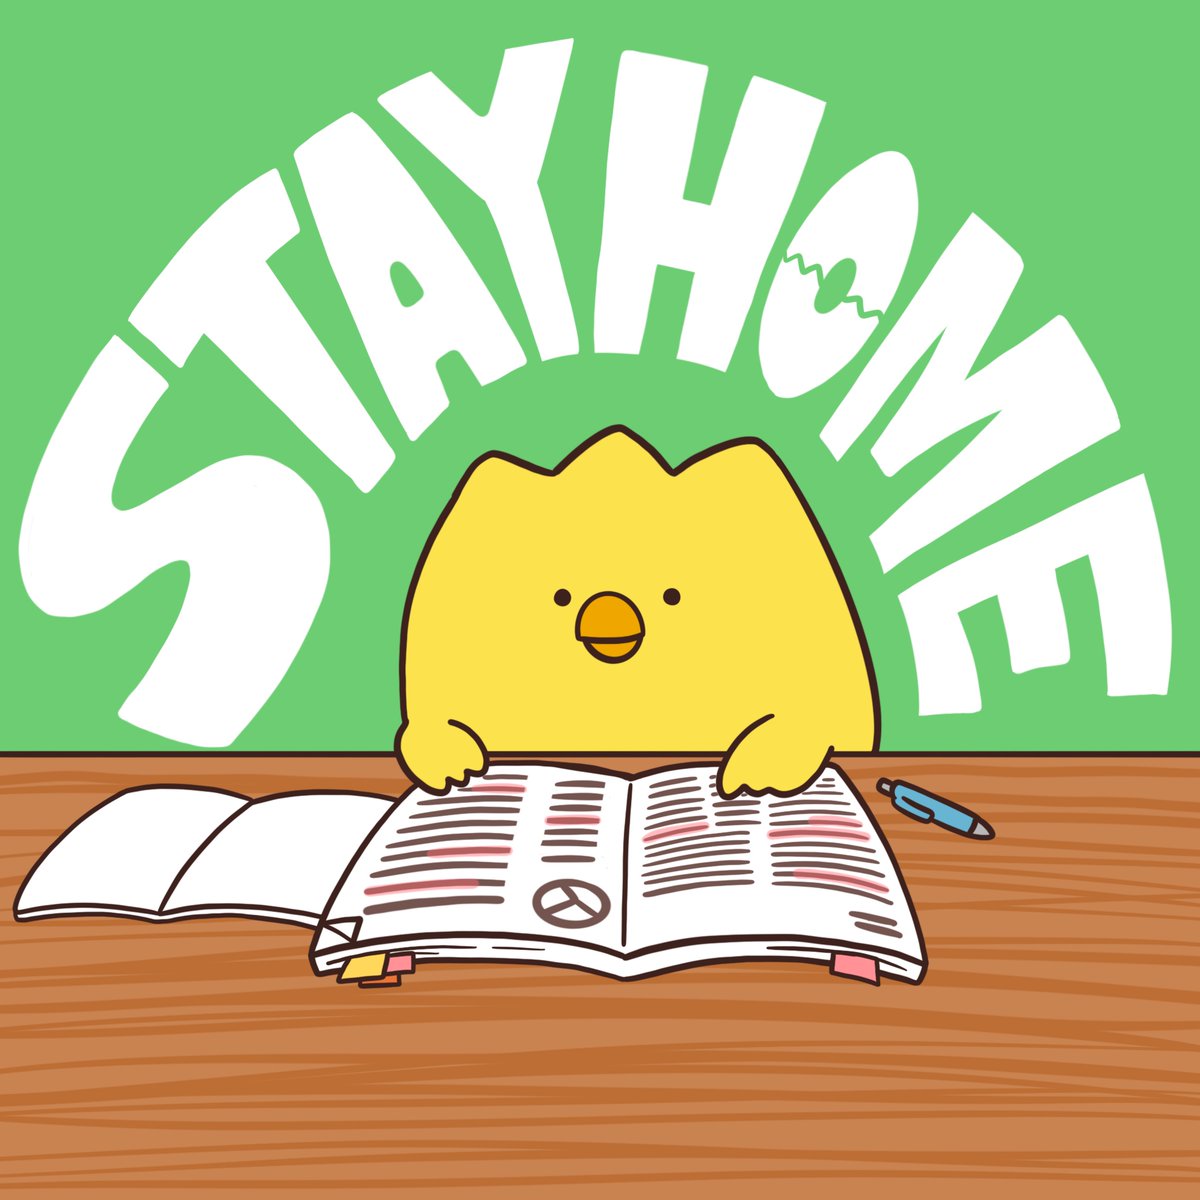 「STAYHOMEアイコン
ひよバージョンです 」|橋本ナオキ / 会社員でぶどりのイラスト